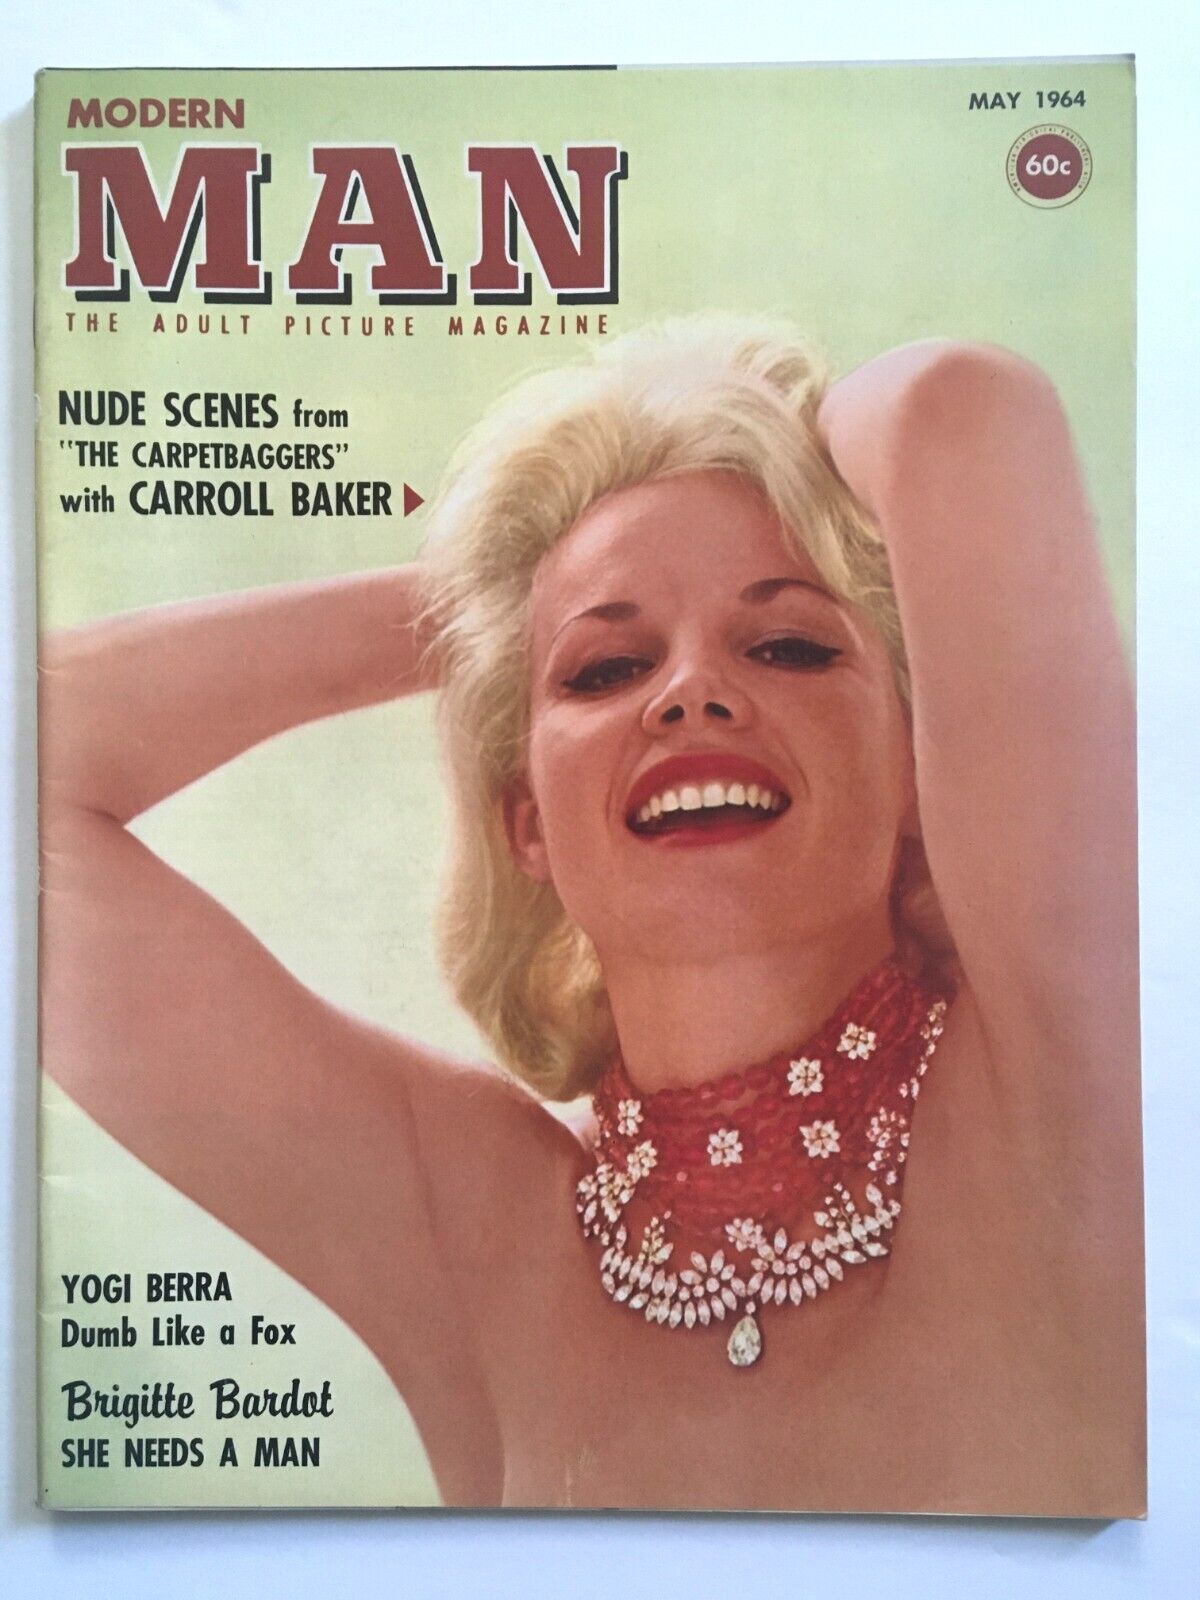 Modern Man Vol. 13 No.11 May 1964 Featuring: Carroll Baker,Yogi Berra,Bardot